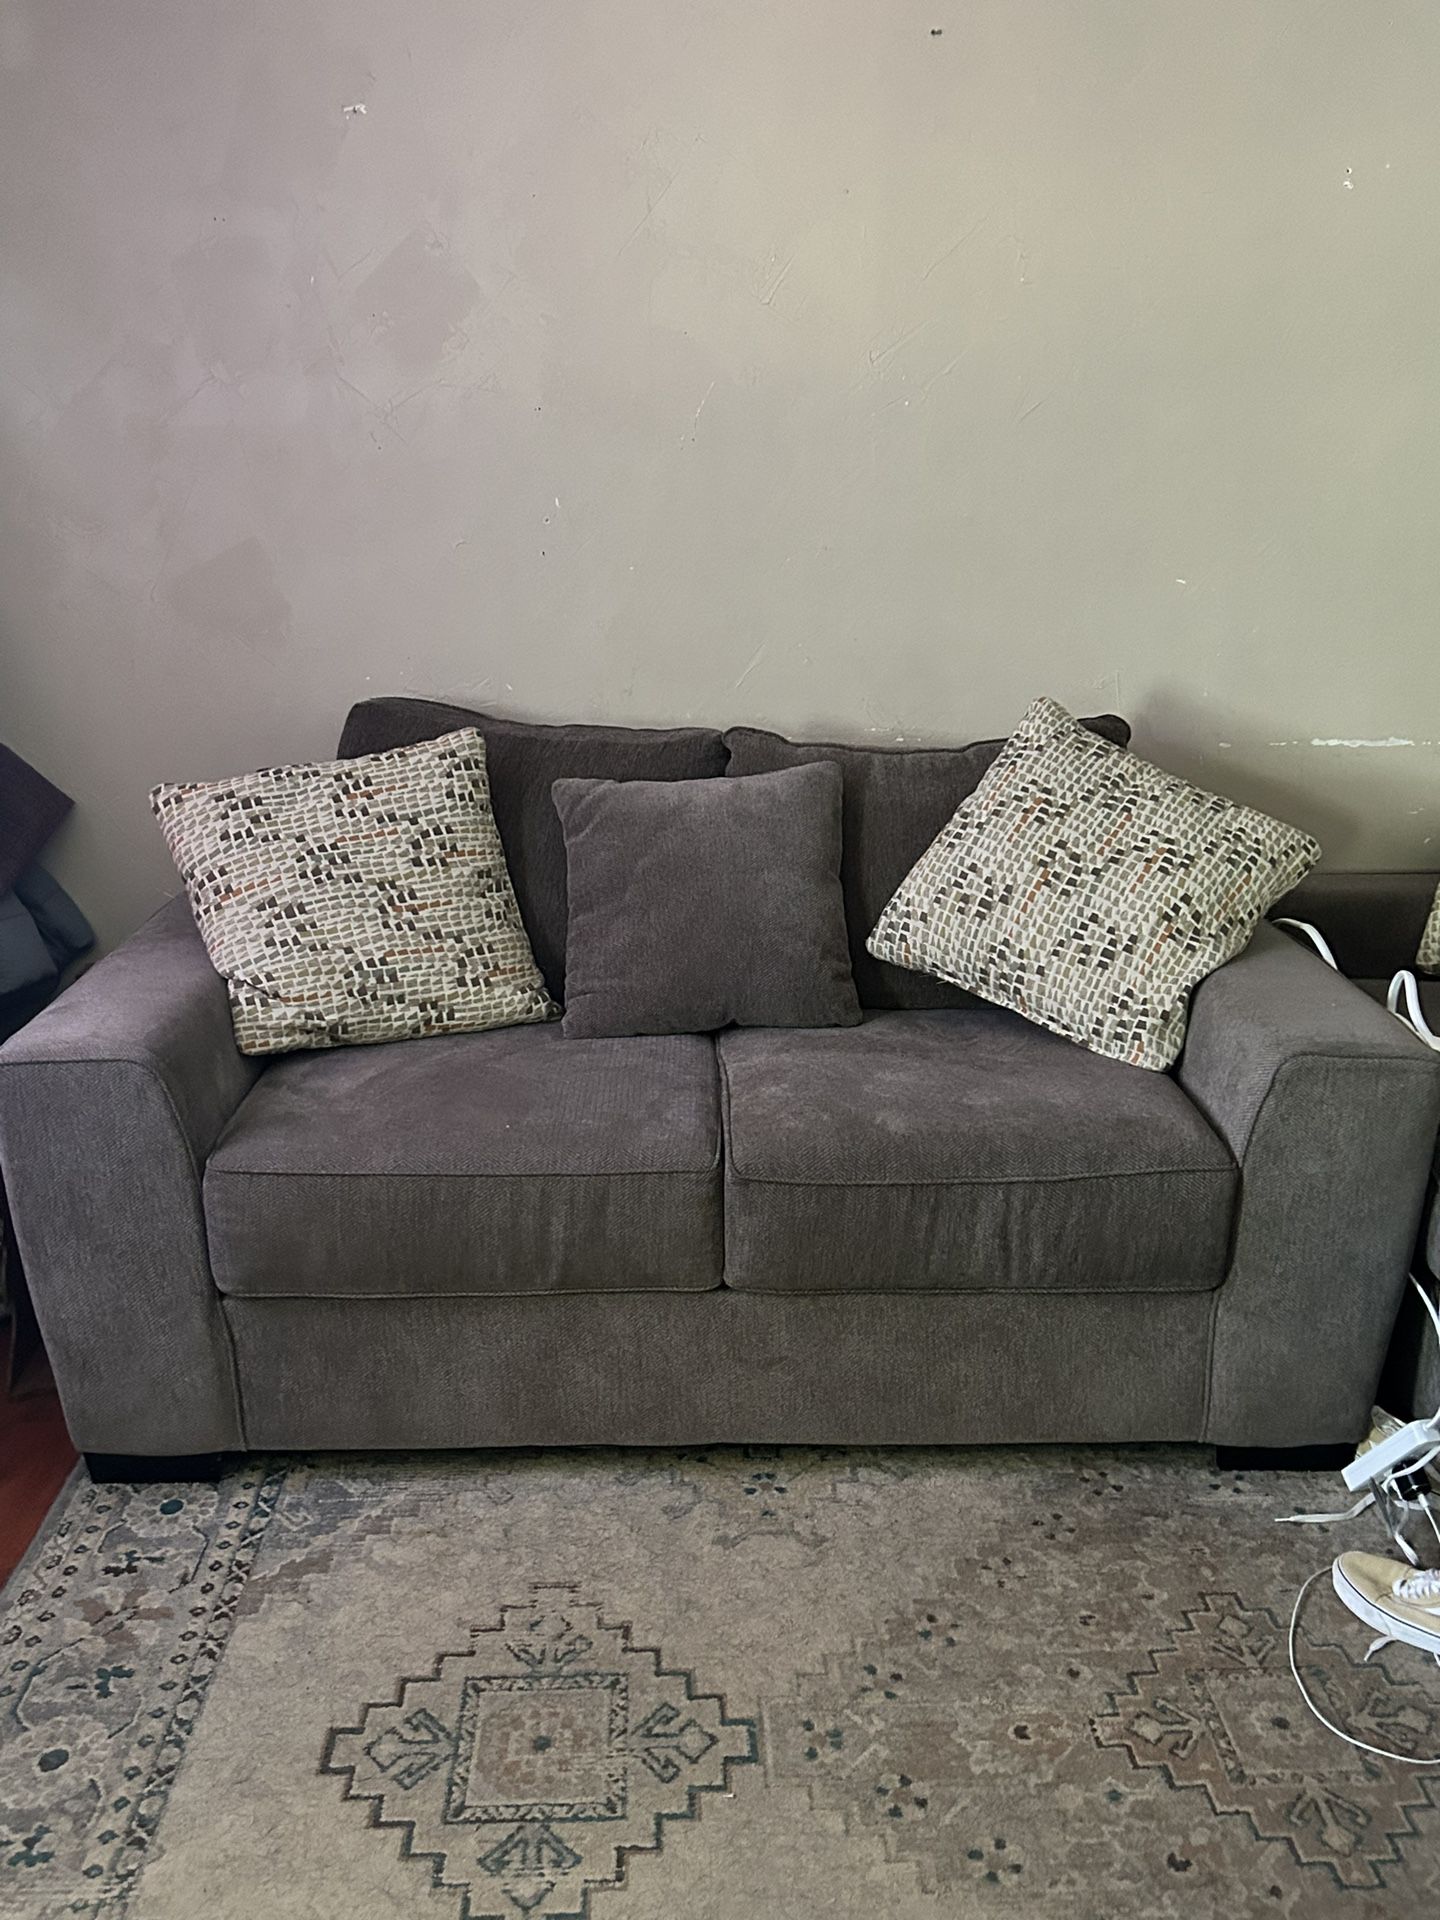 Sofa For Sale. 